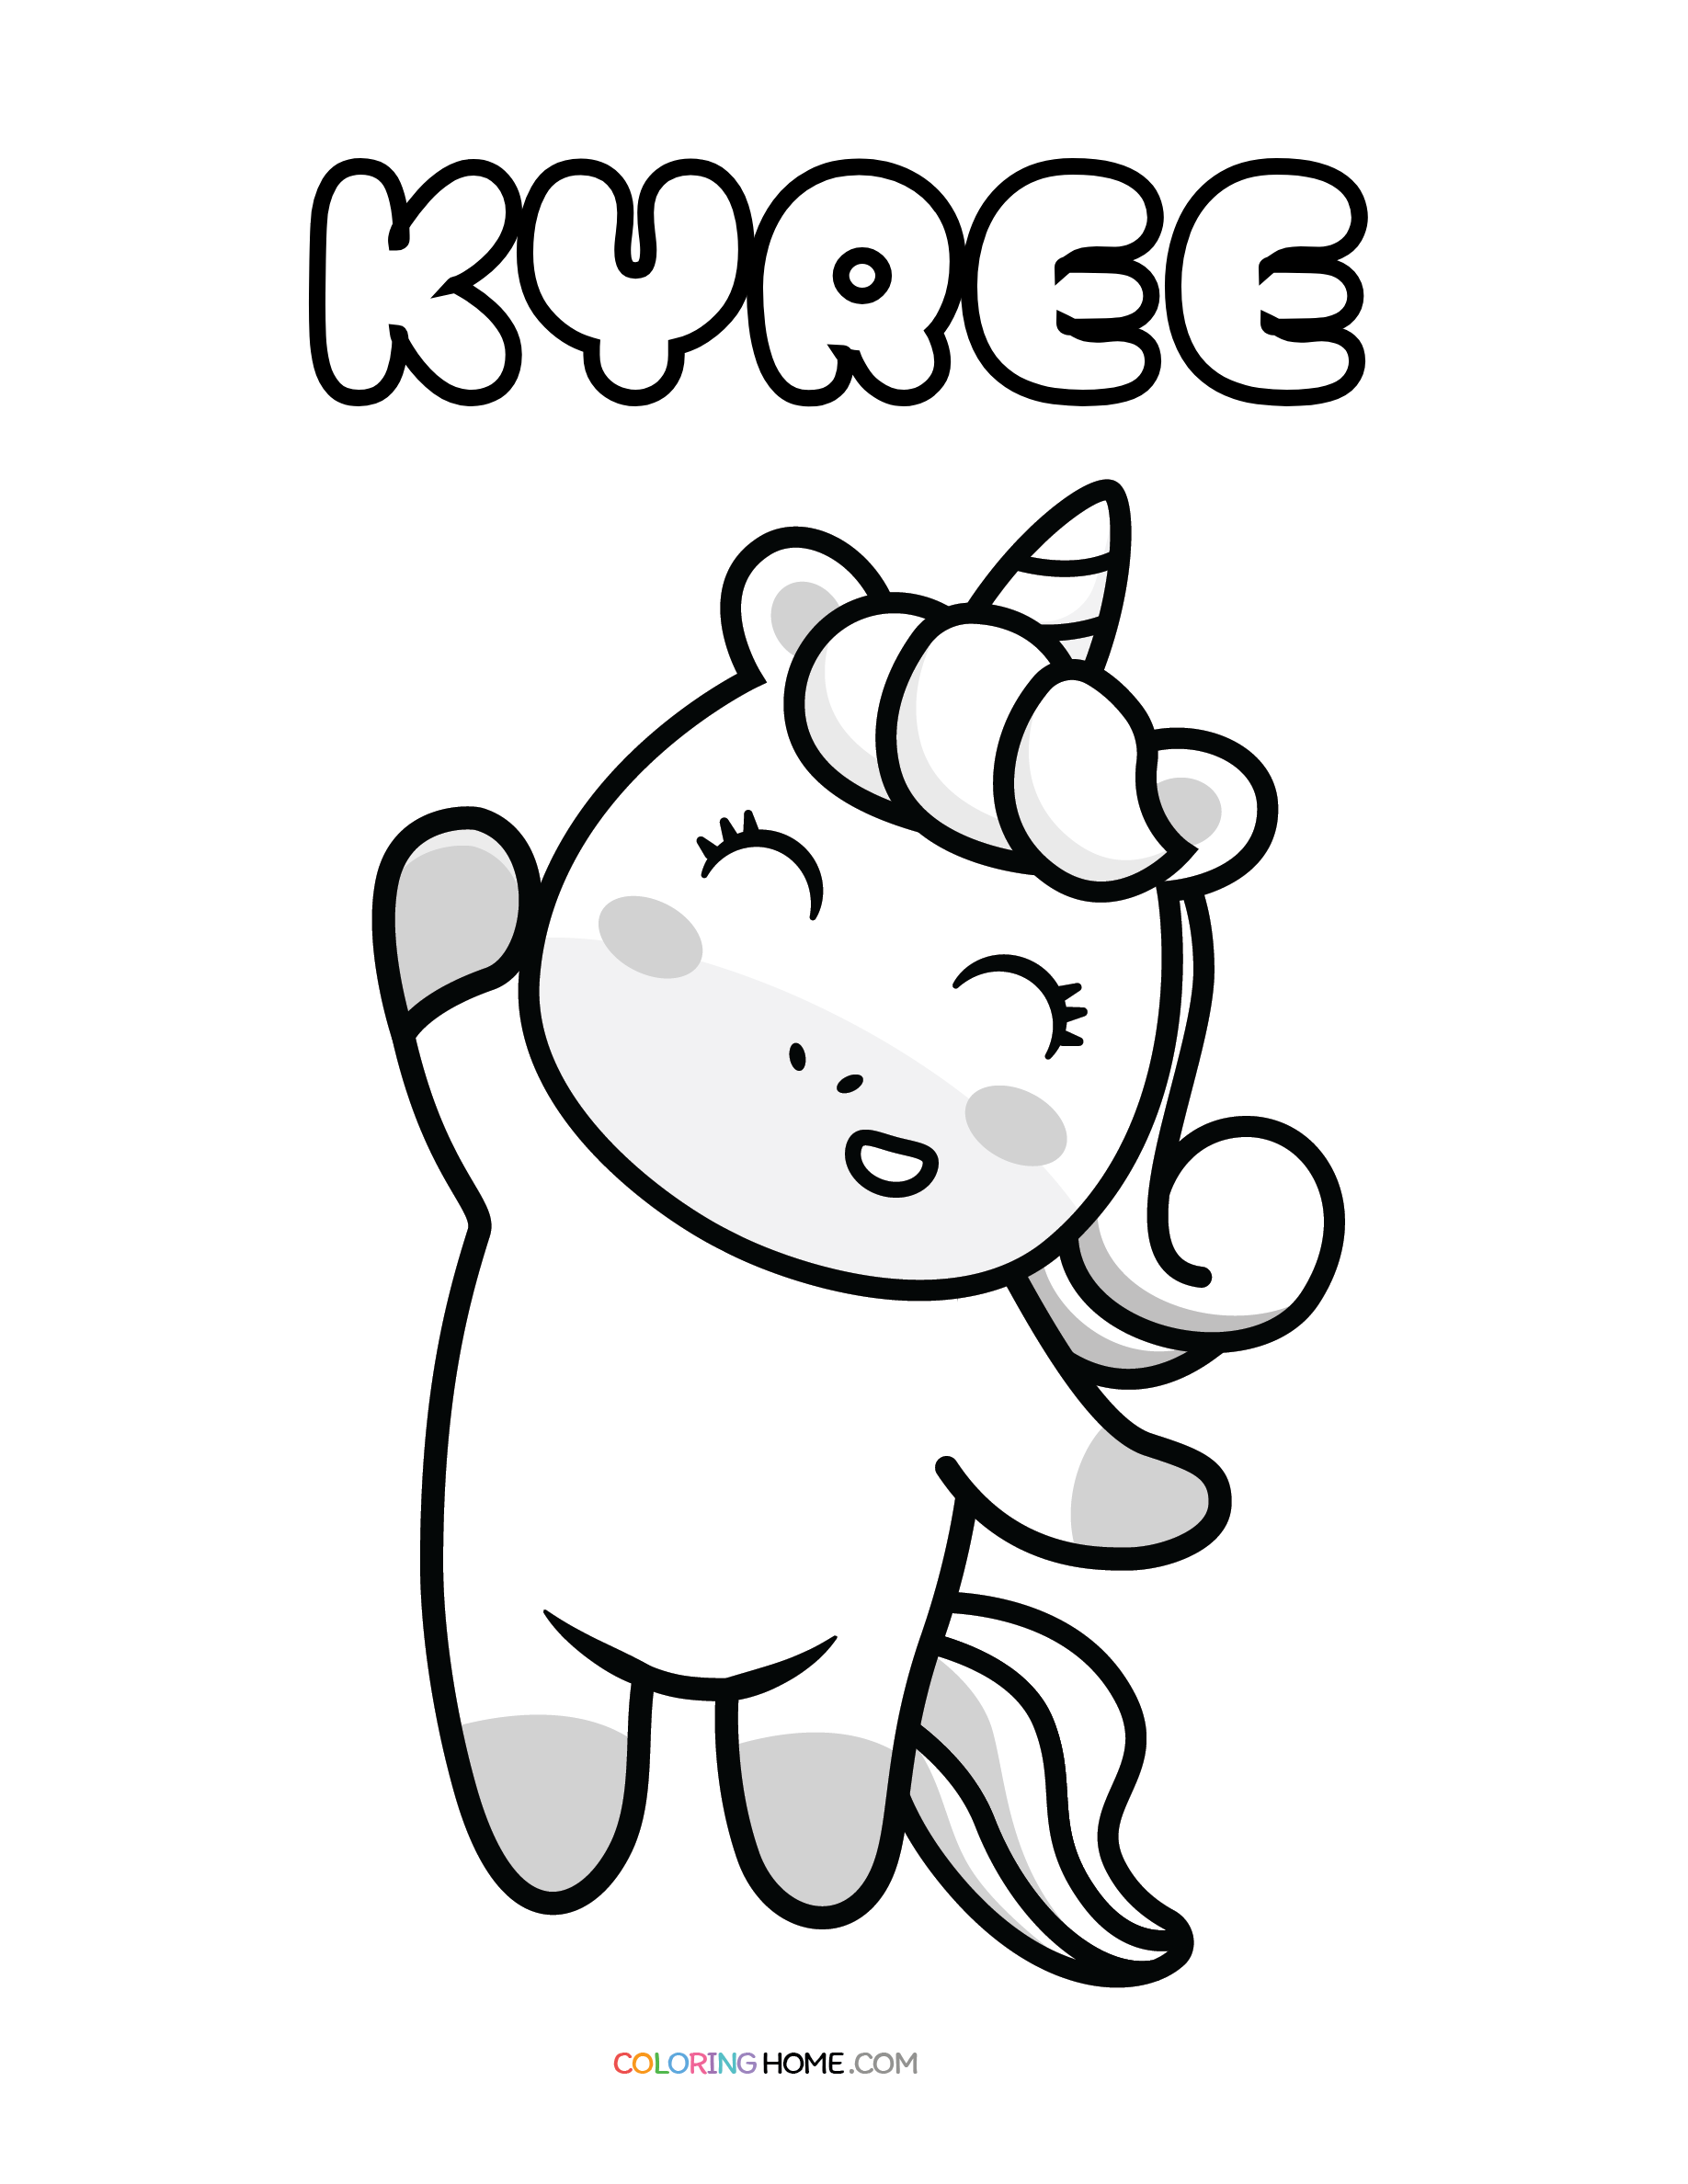 Kyree unicorn coloring page